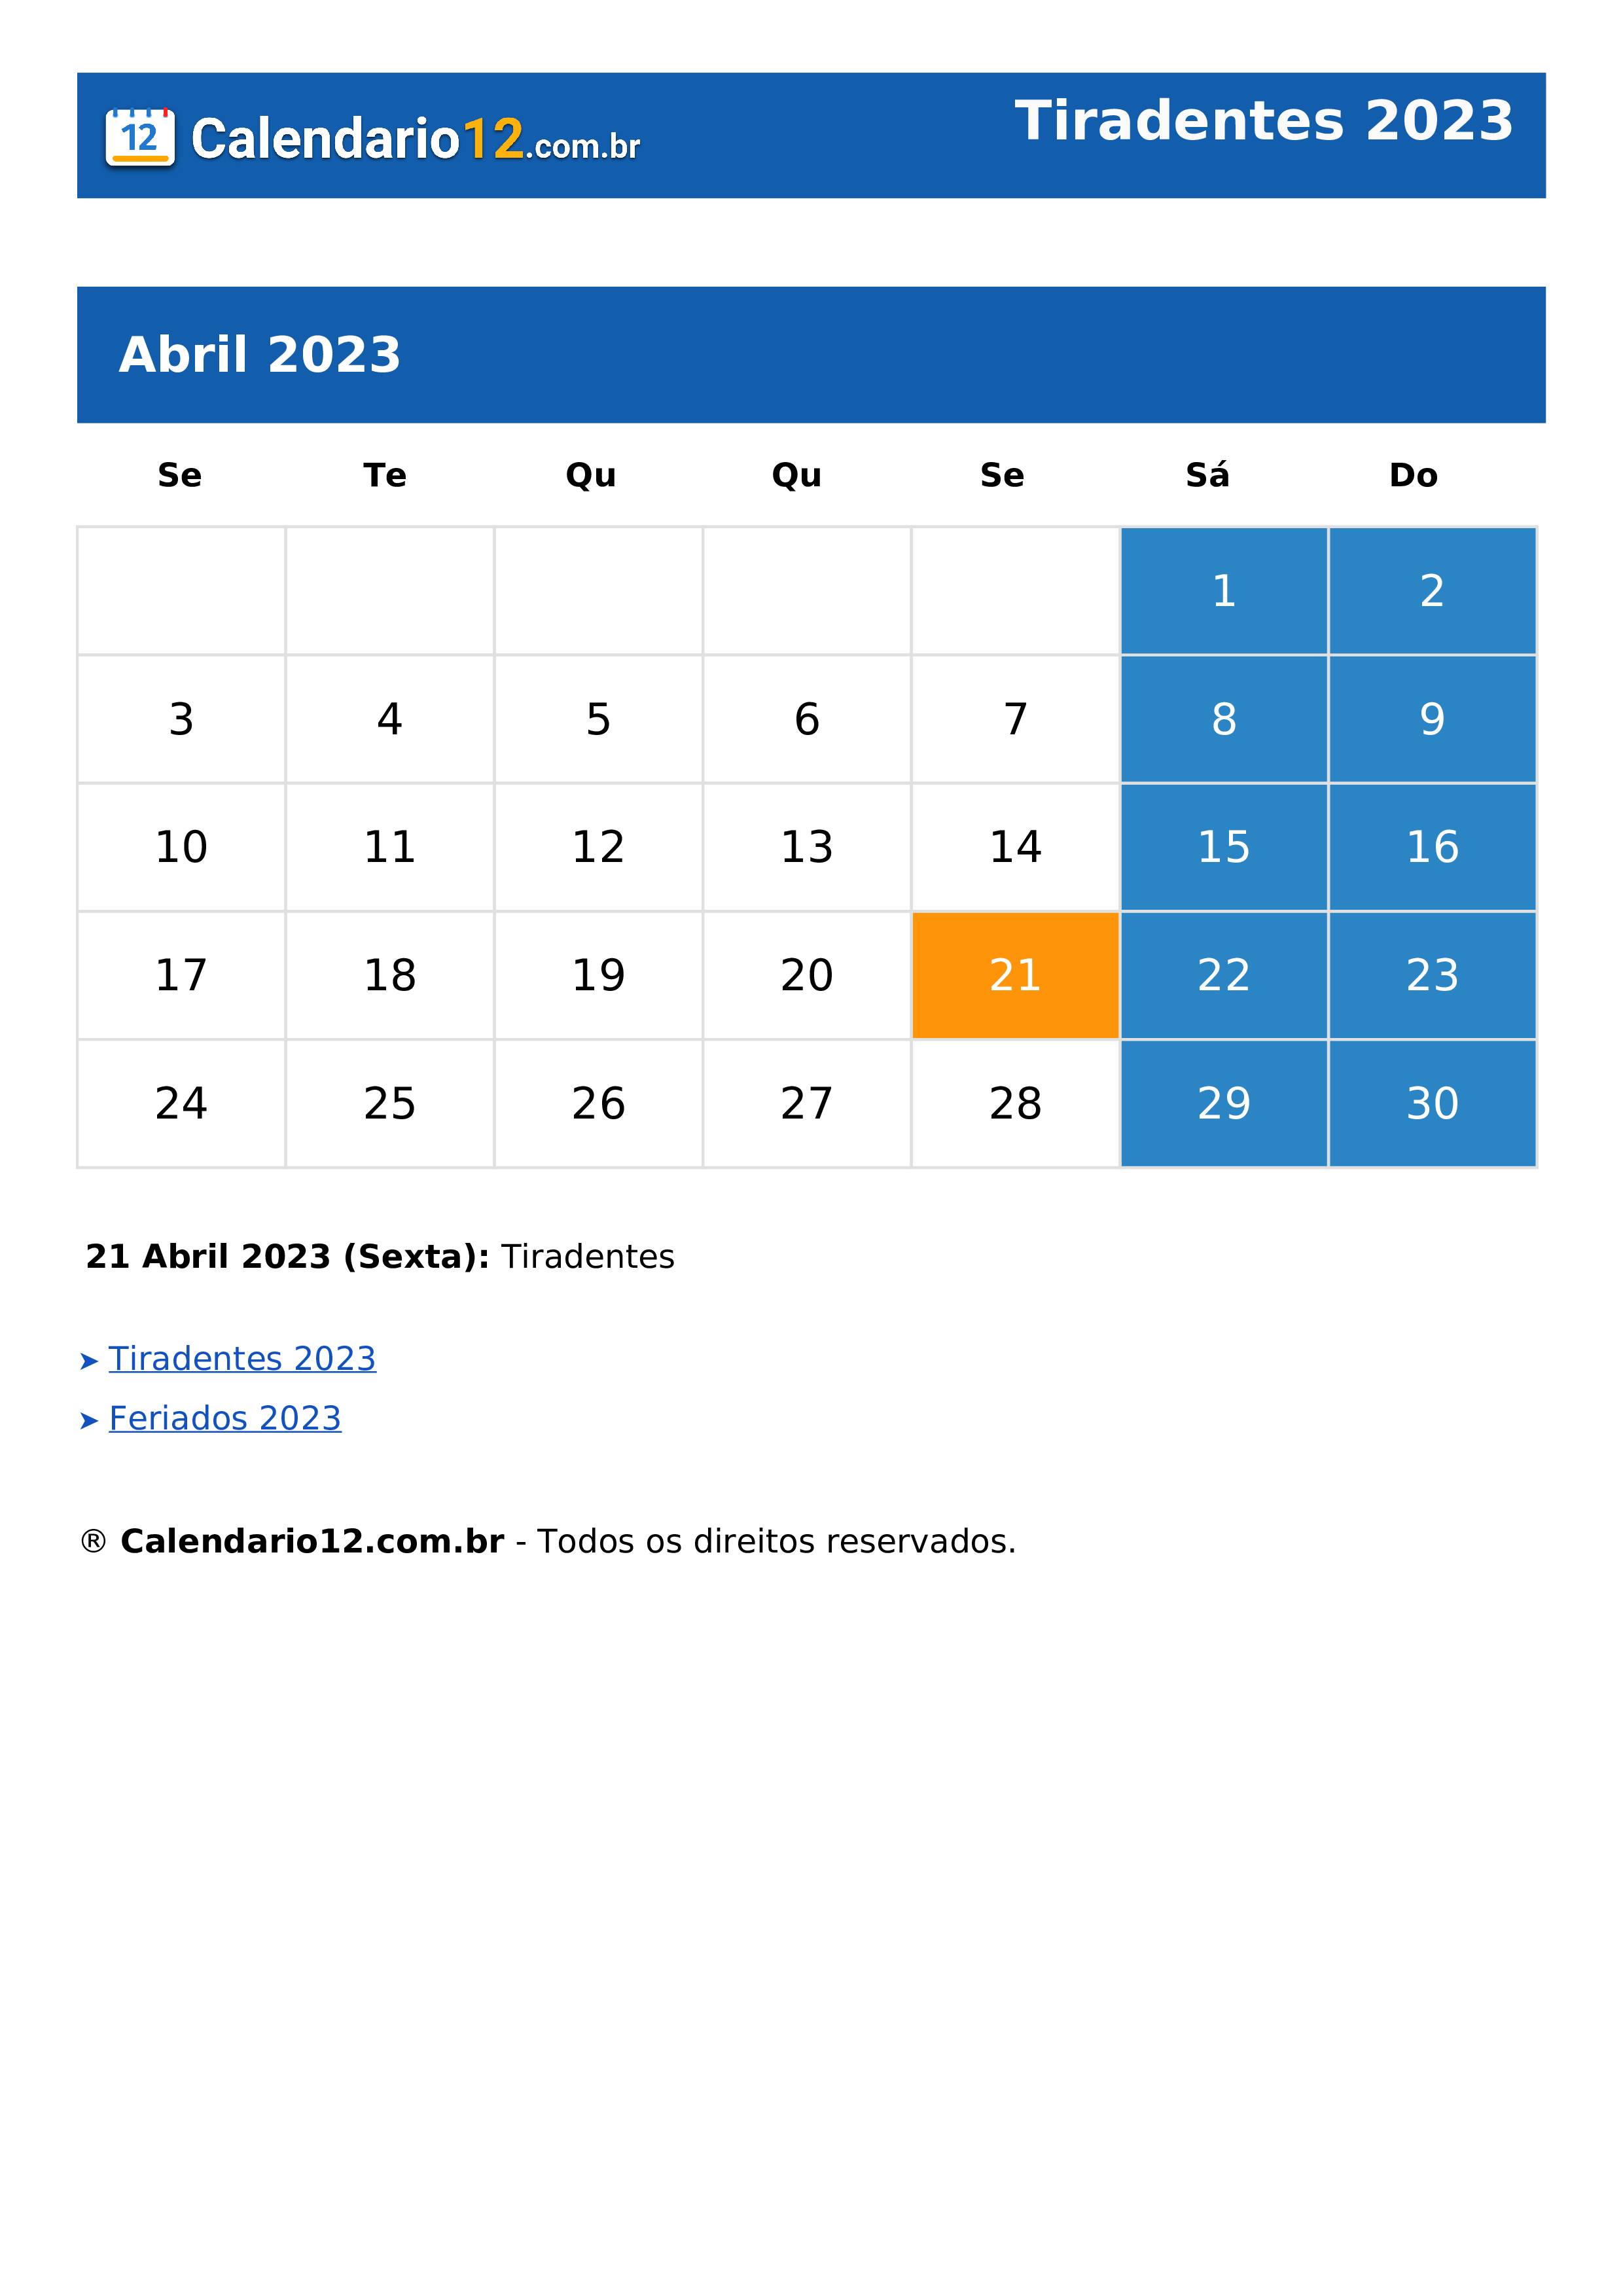 Tiradentes 2023